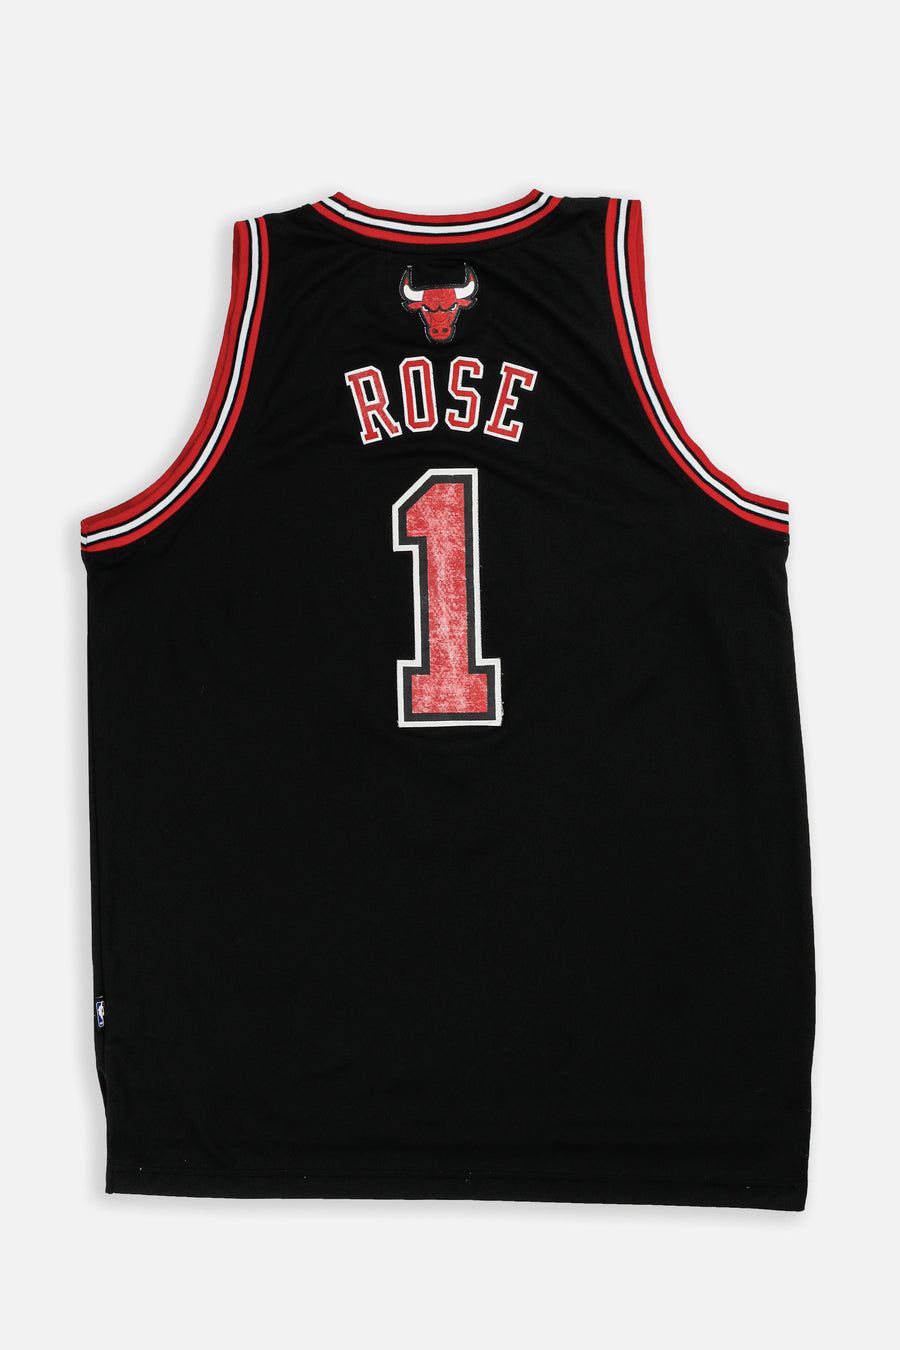 Vintage Chicago Bulls NBA Jersey - XL